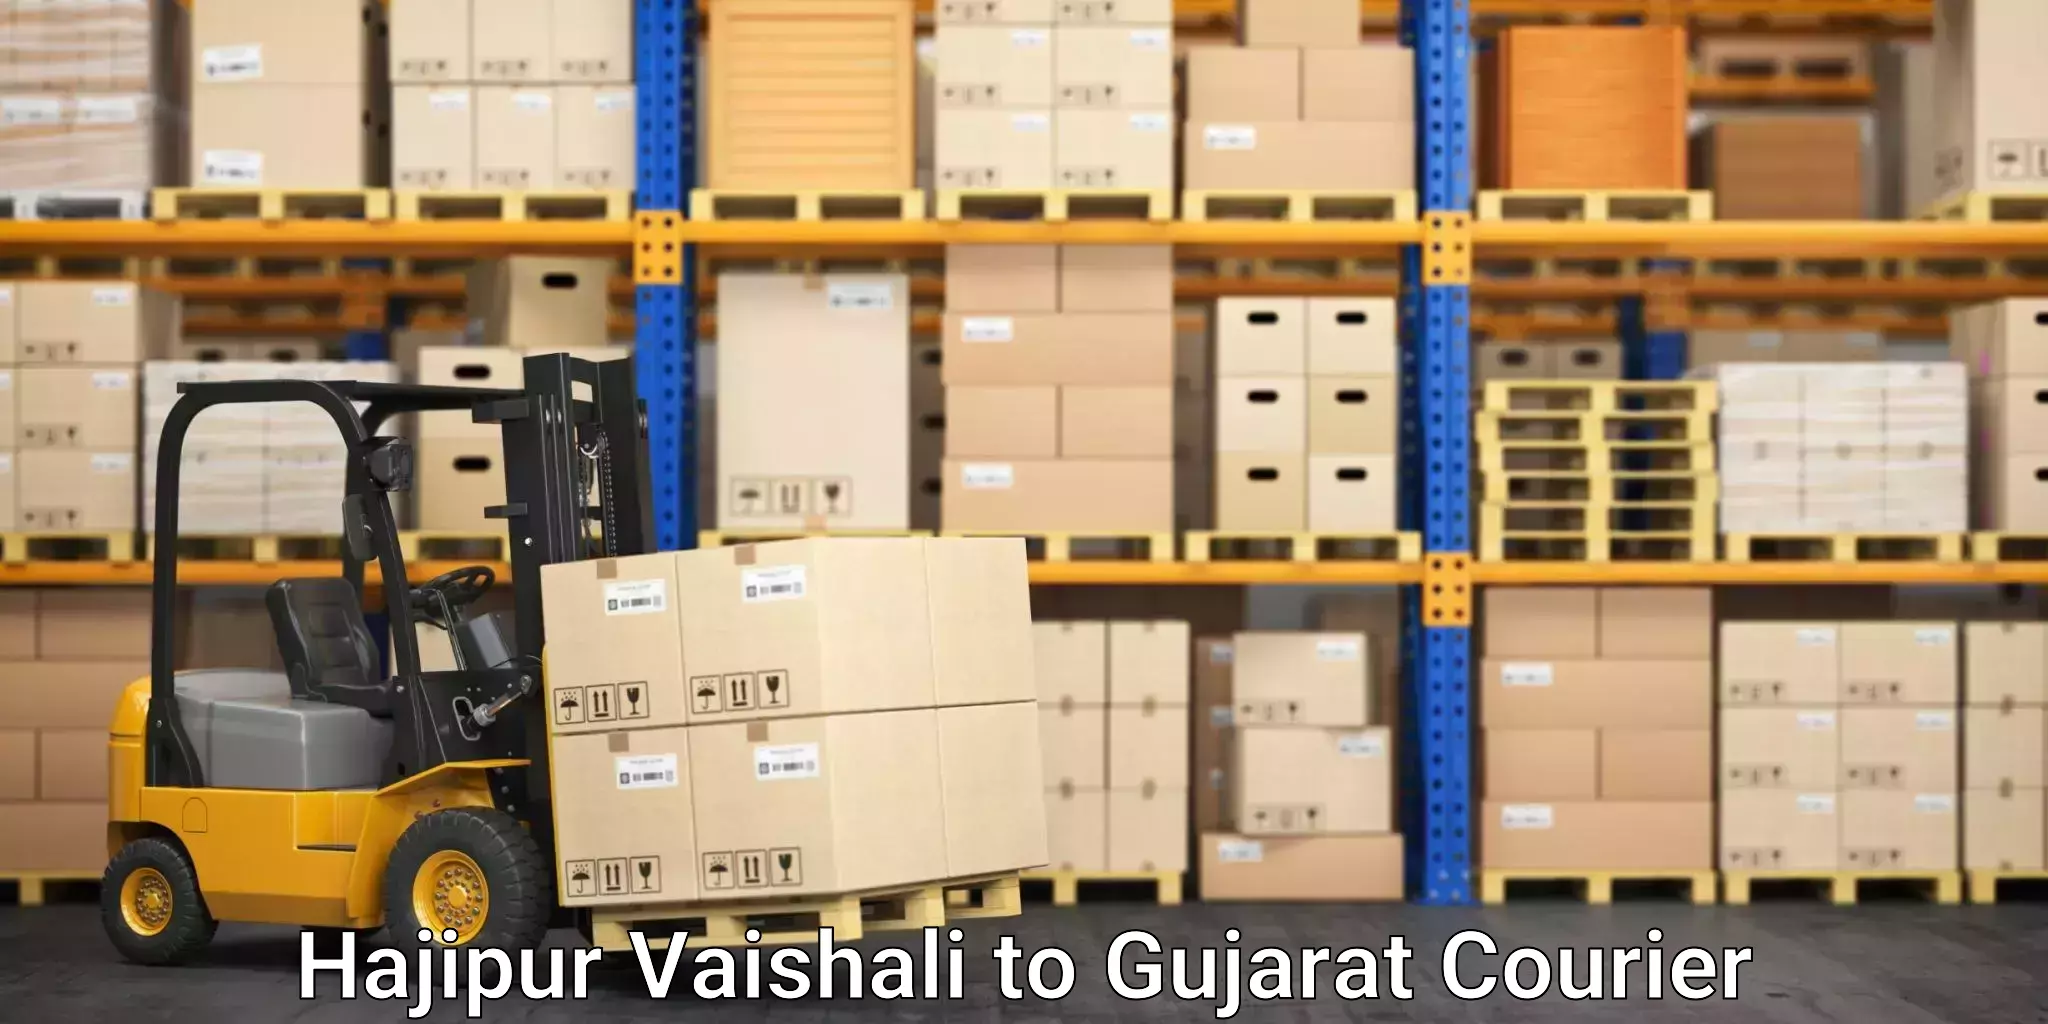 Professional movers and packers Hajipur Vaishali to Gujarat